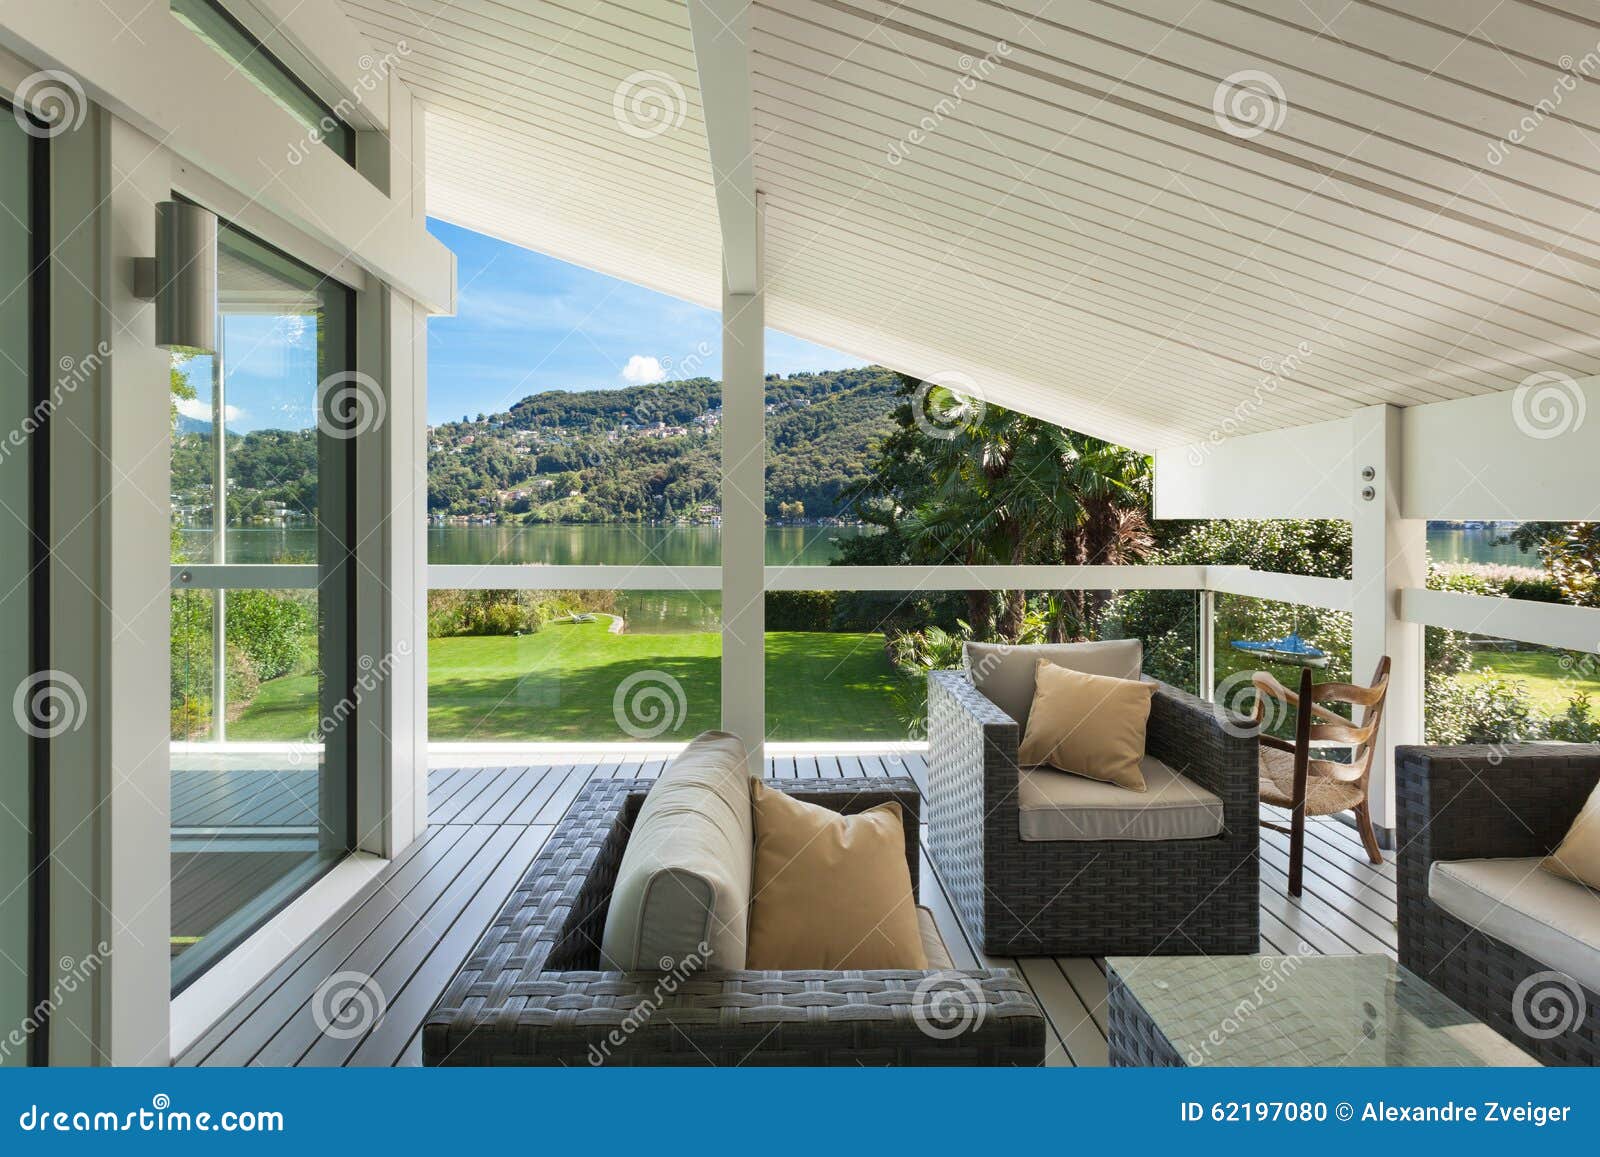 beautiful veranda with furniture